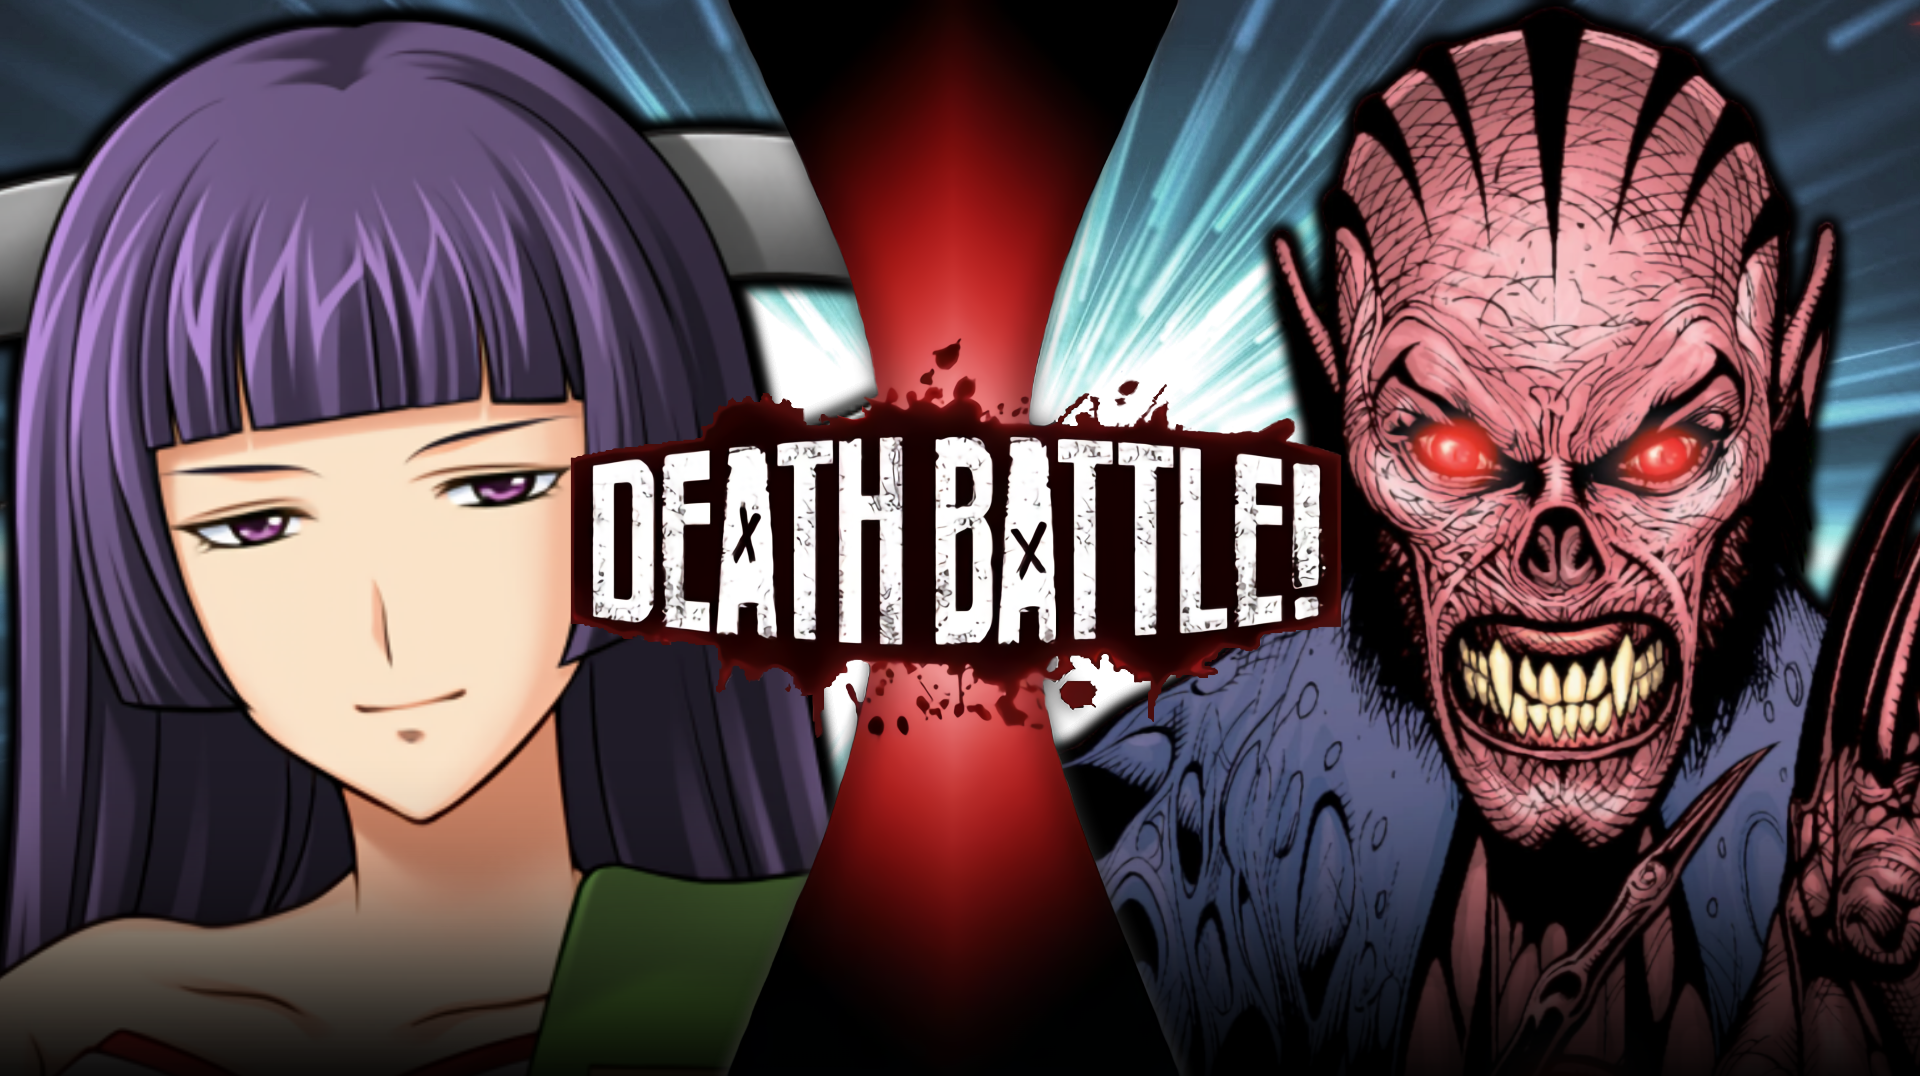 Virgin Rooster Teeth VS Chad Death Battle, Virgin vs. Chad